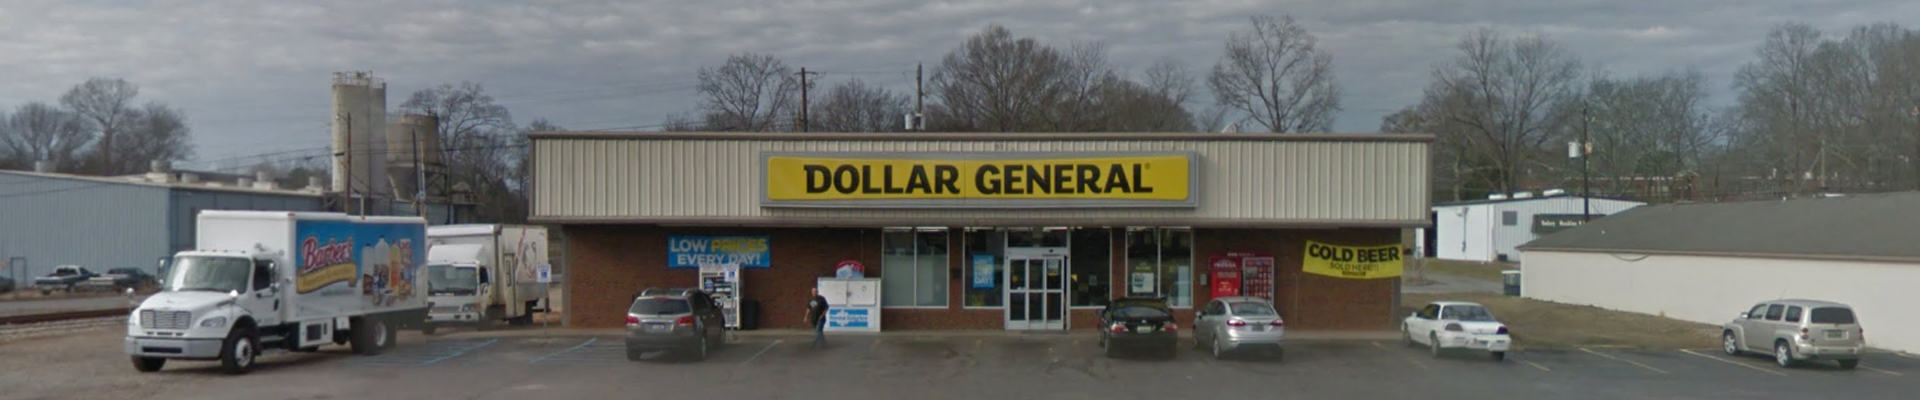 Dollar General (1080) - Tallagega, Alabama